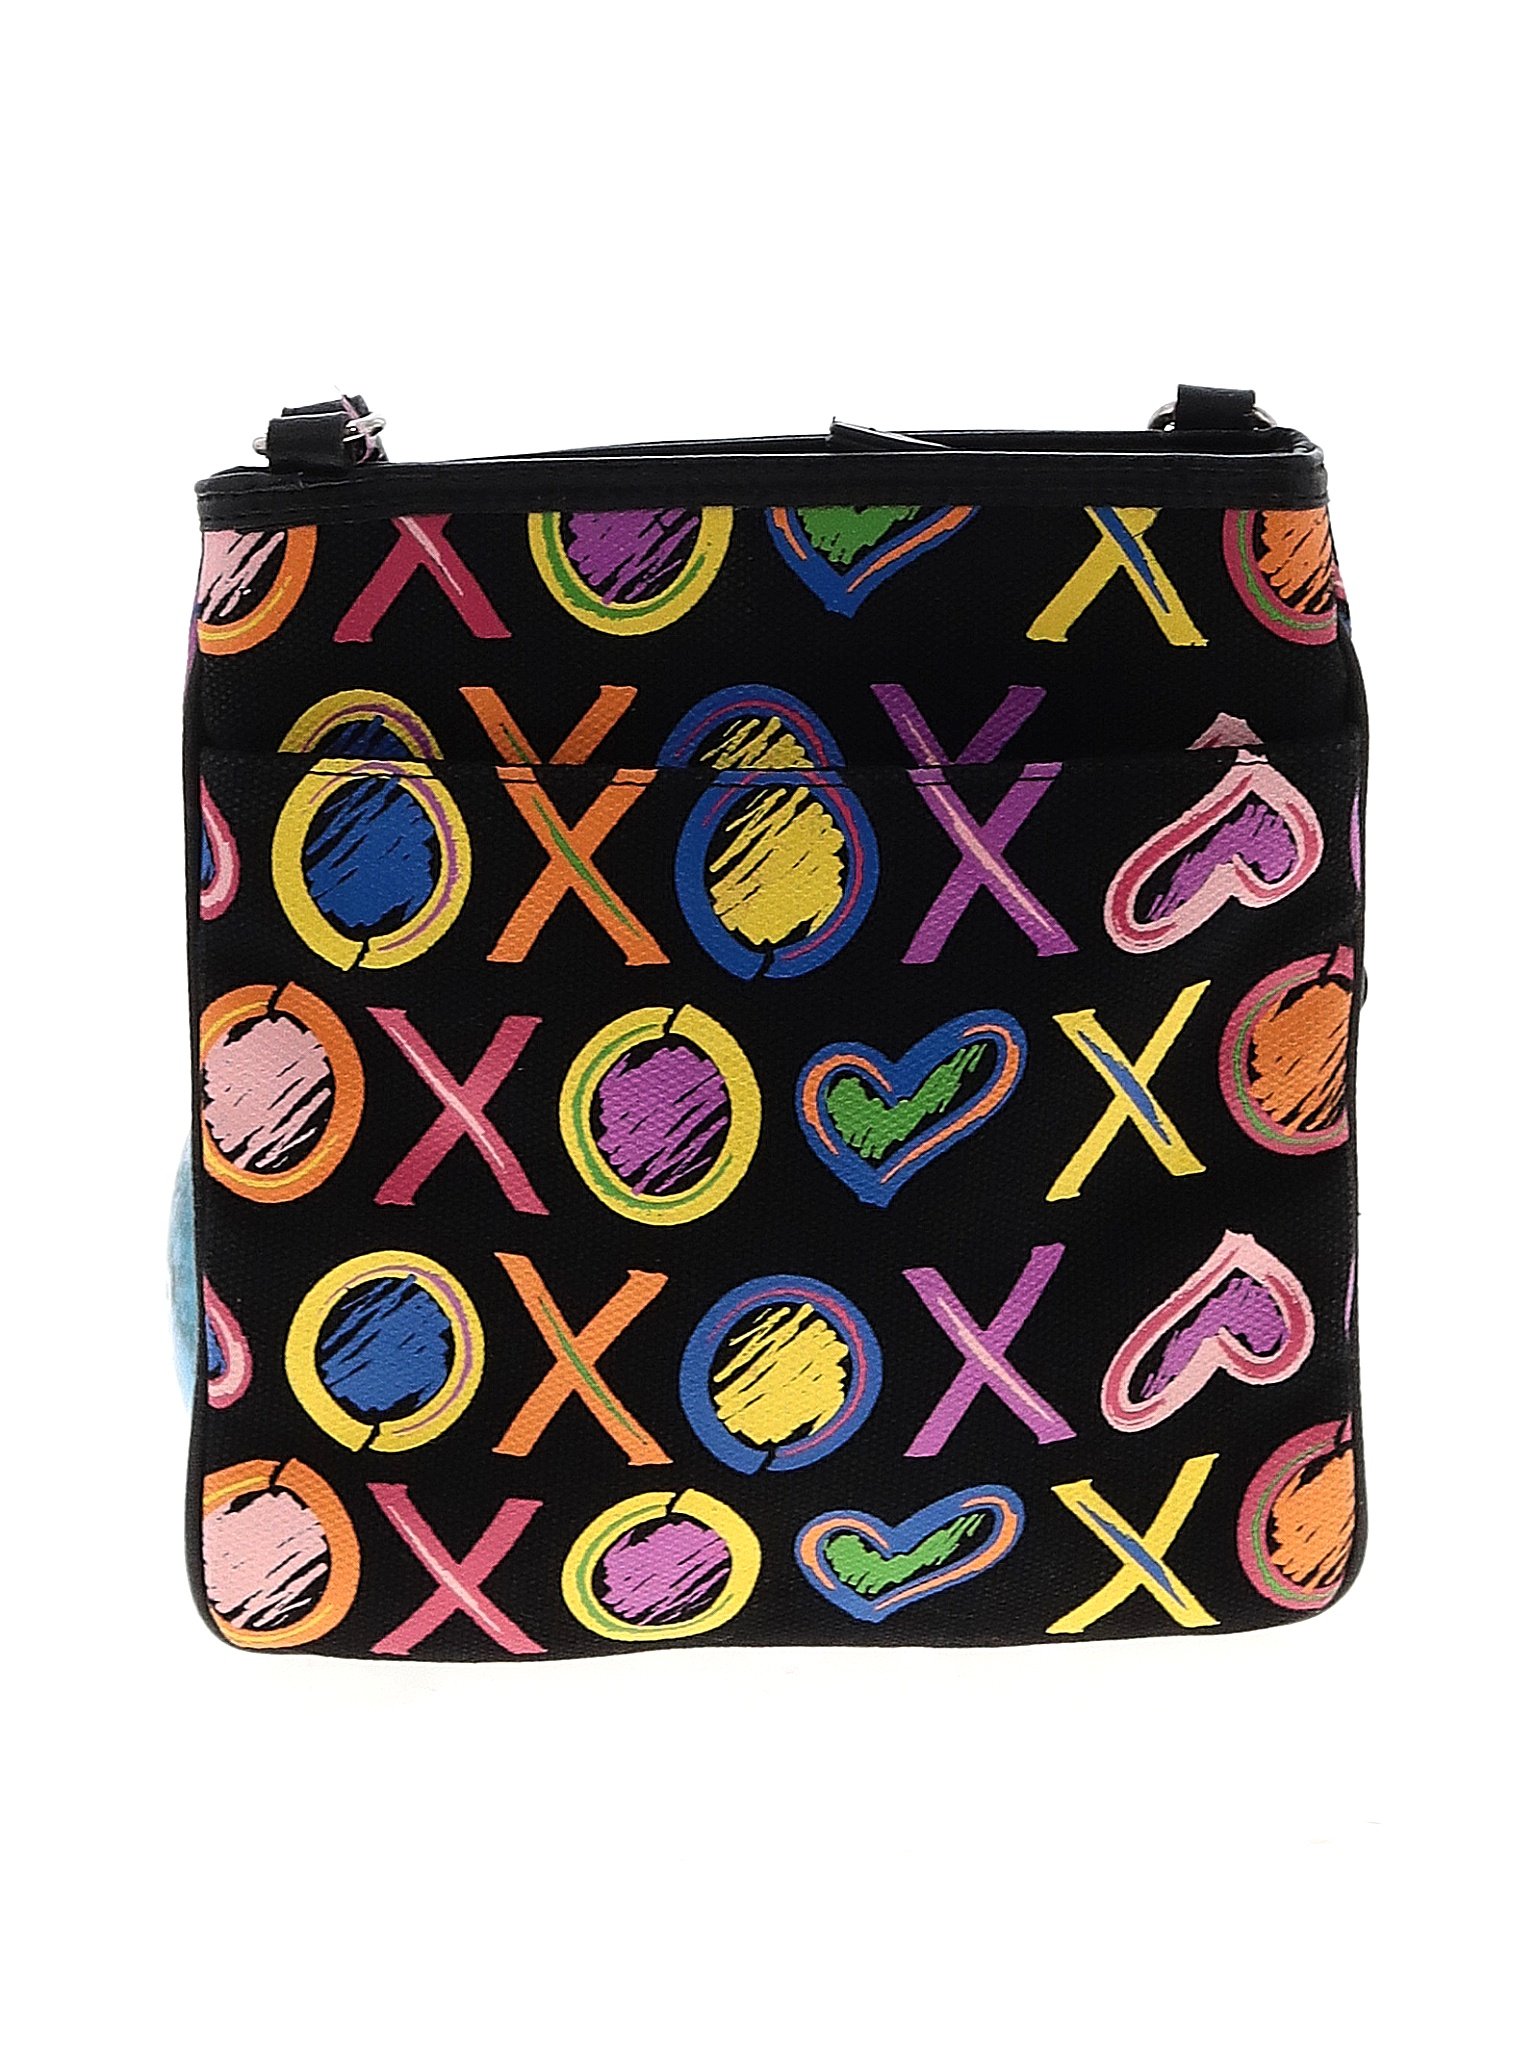 XOXO Handbags On Sale Up To 90% Off Retail | thredUP